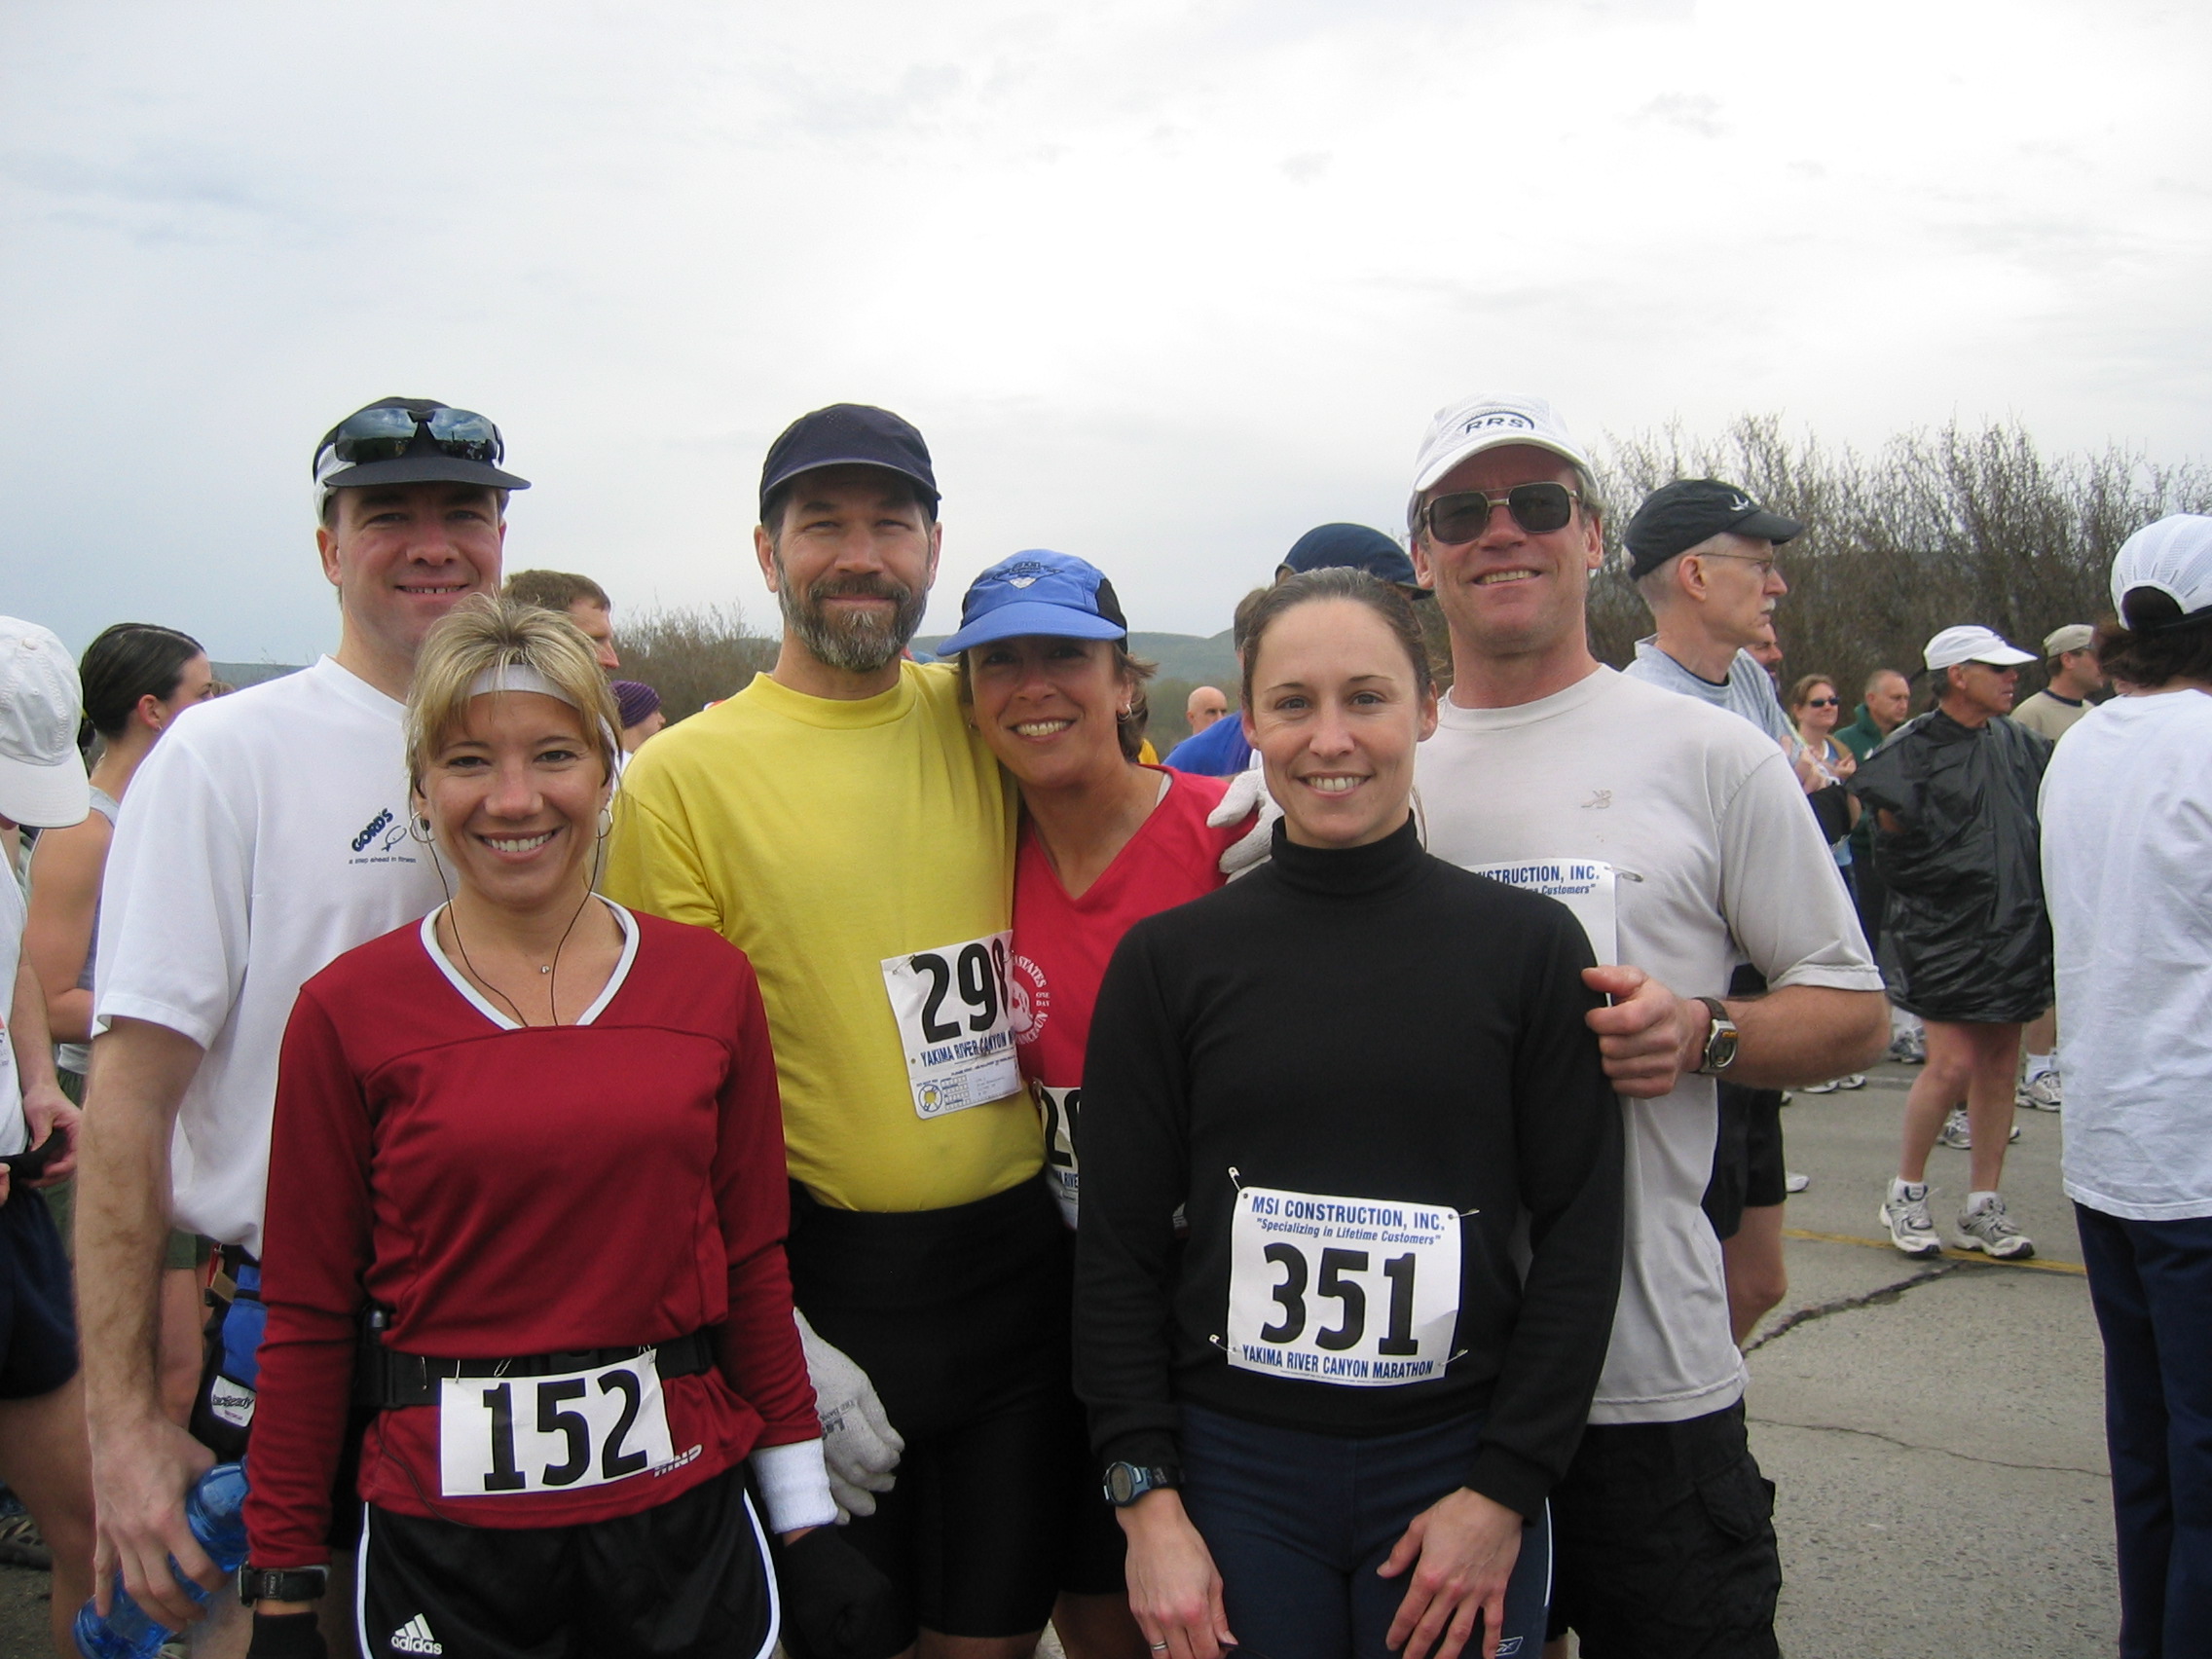 Yakima finish line photo (David, Lisa, Stan, Maura, Wendy, Kevin)